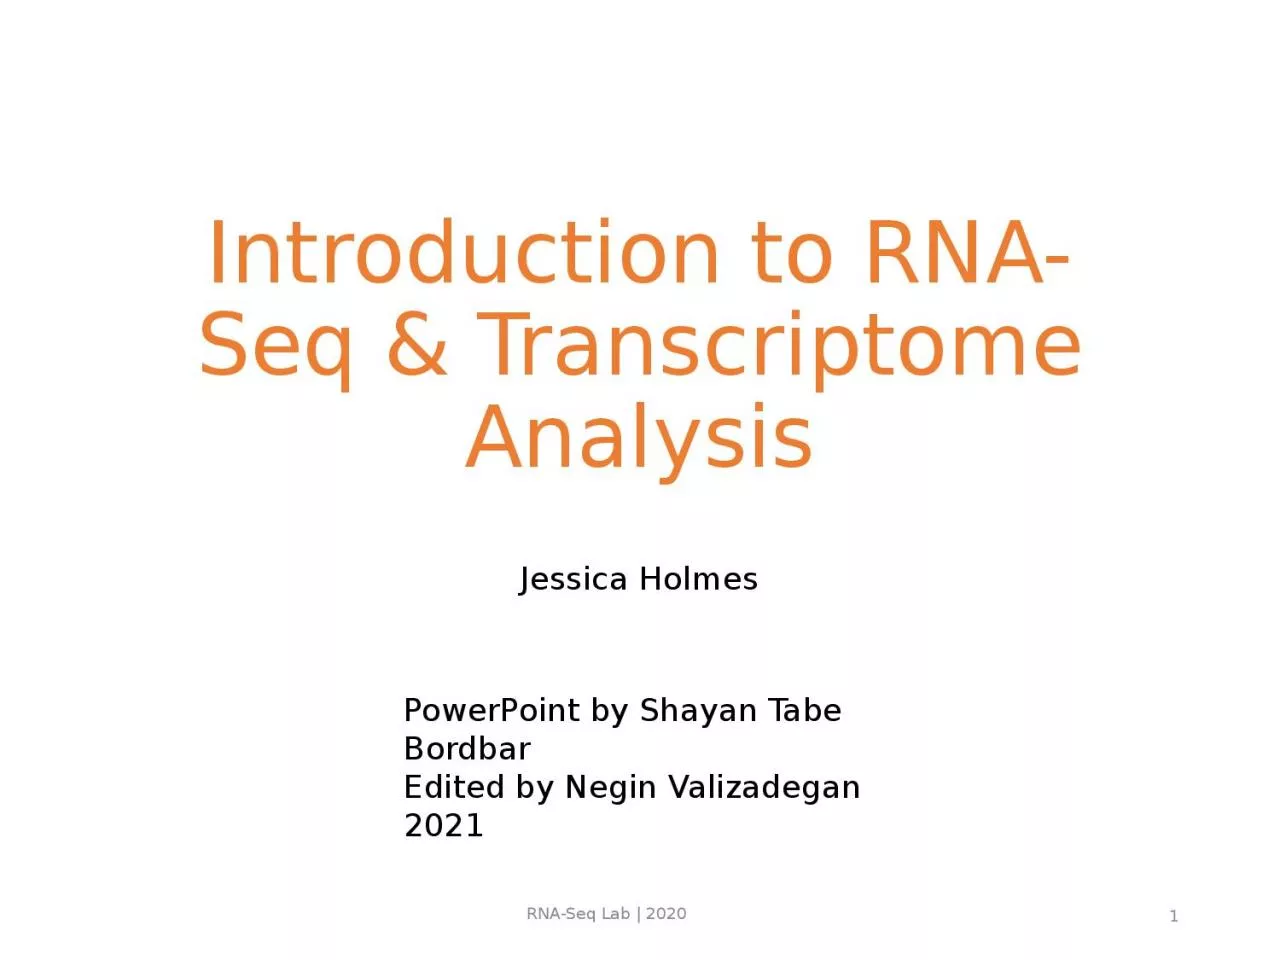 Introduction to RNA-Seq & Transcriptome Analysis